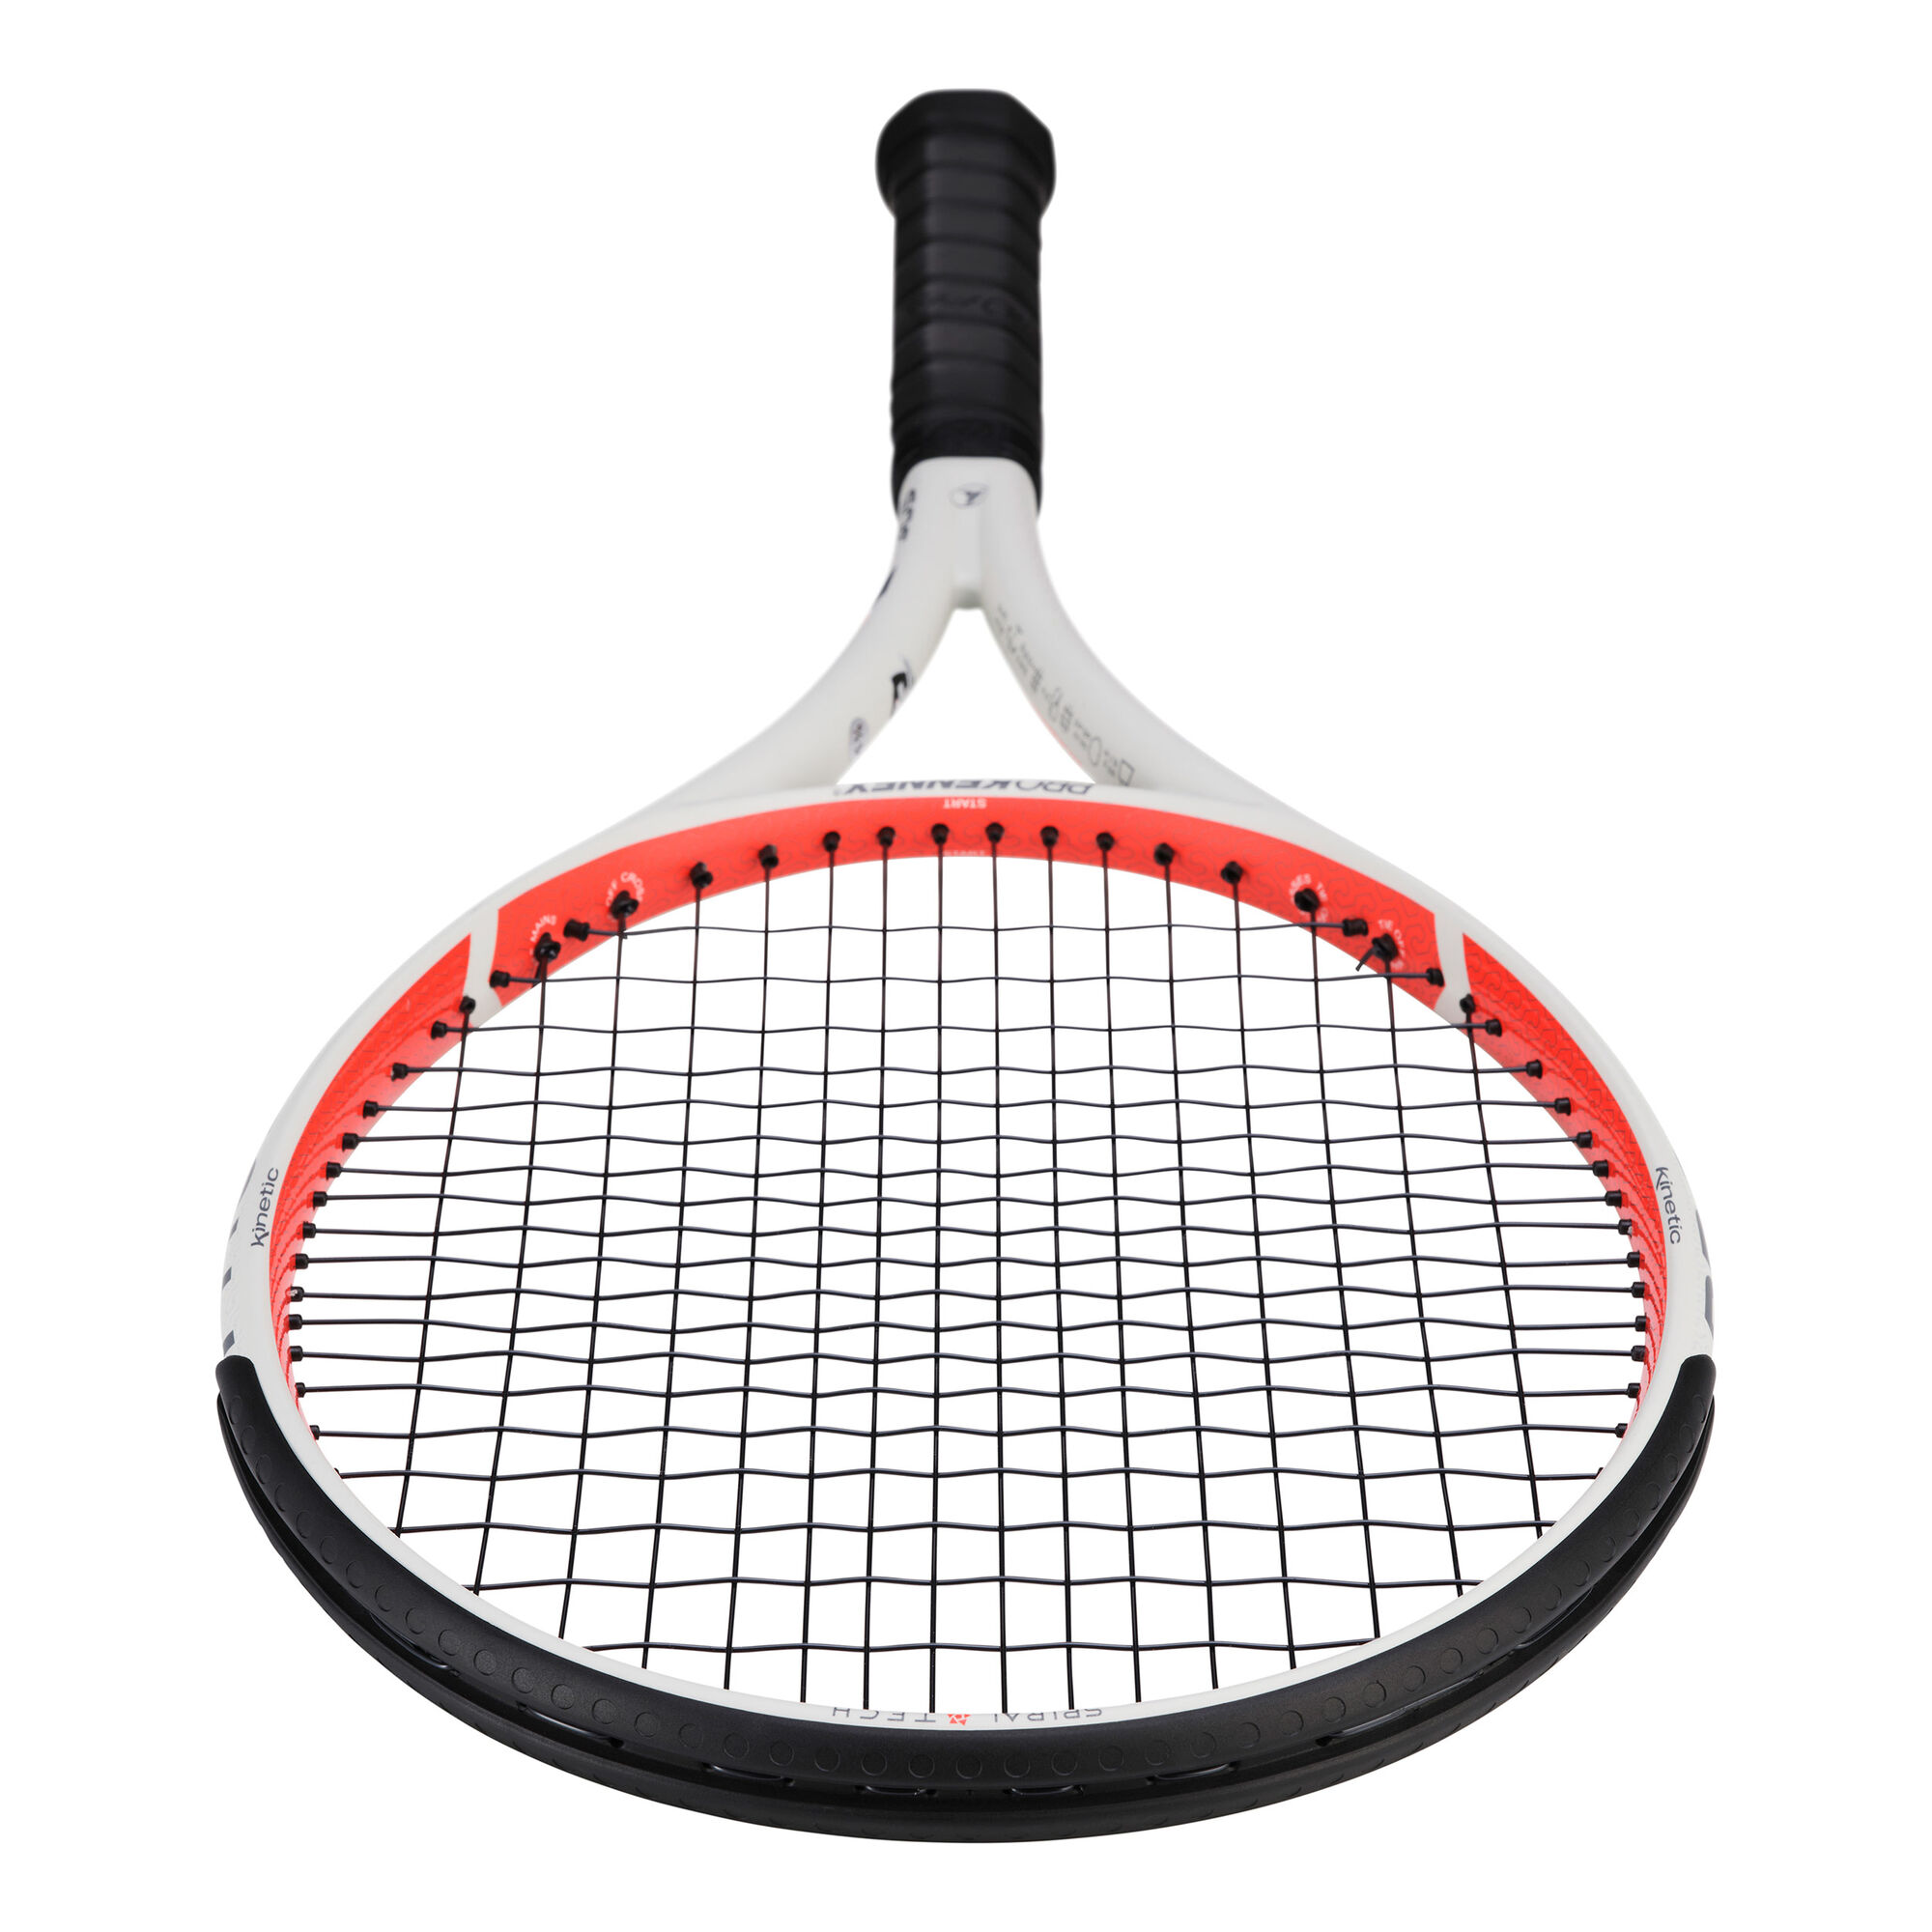 Tennis online PROKENNEX | 10 (305g) Buy Kinetic COM Point